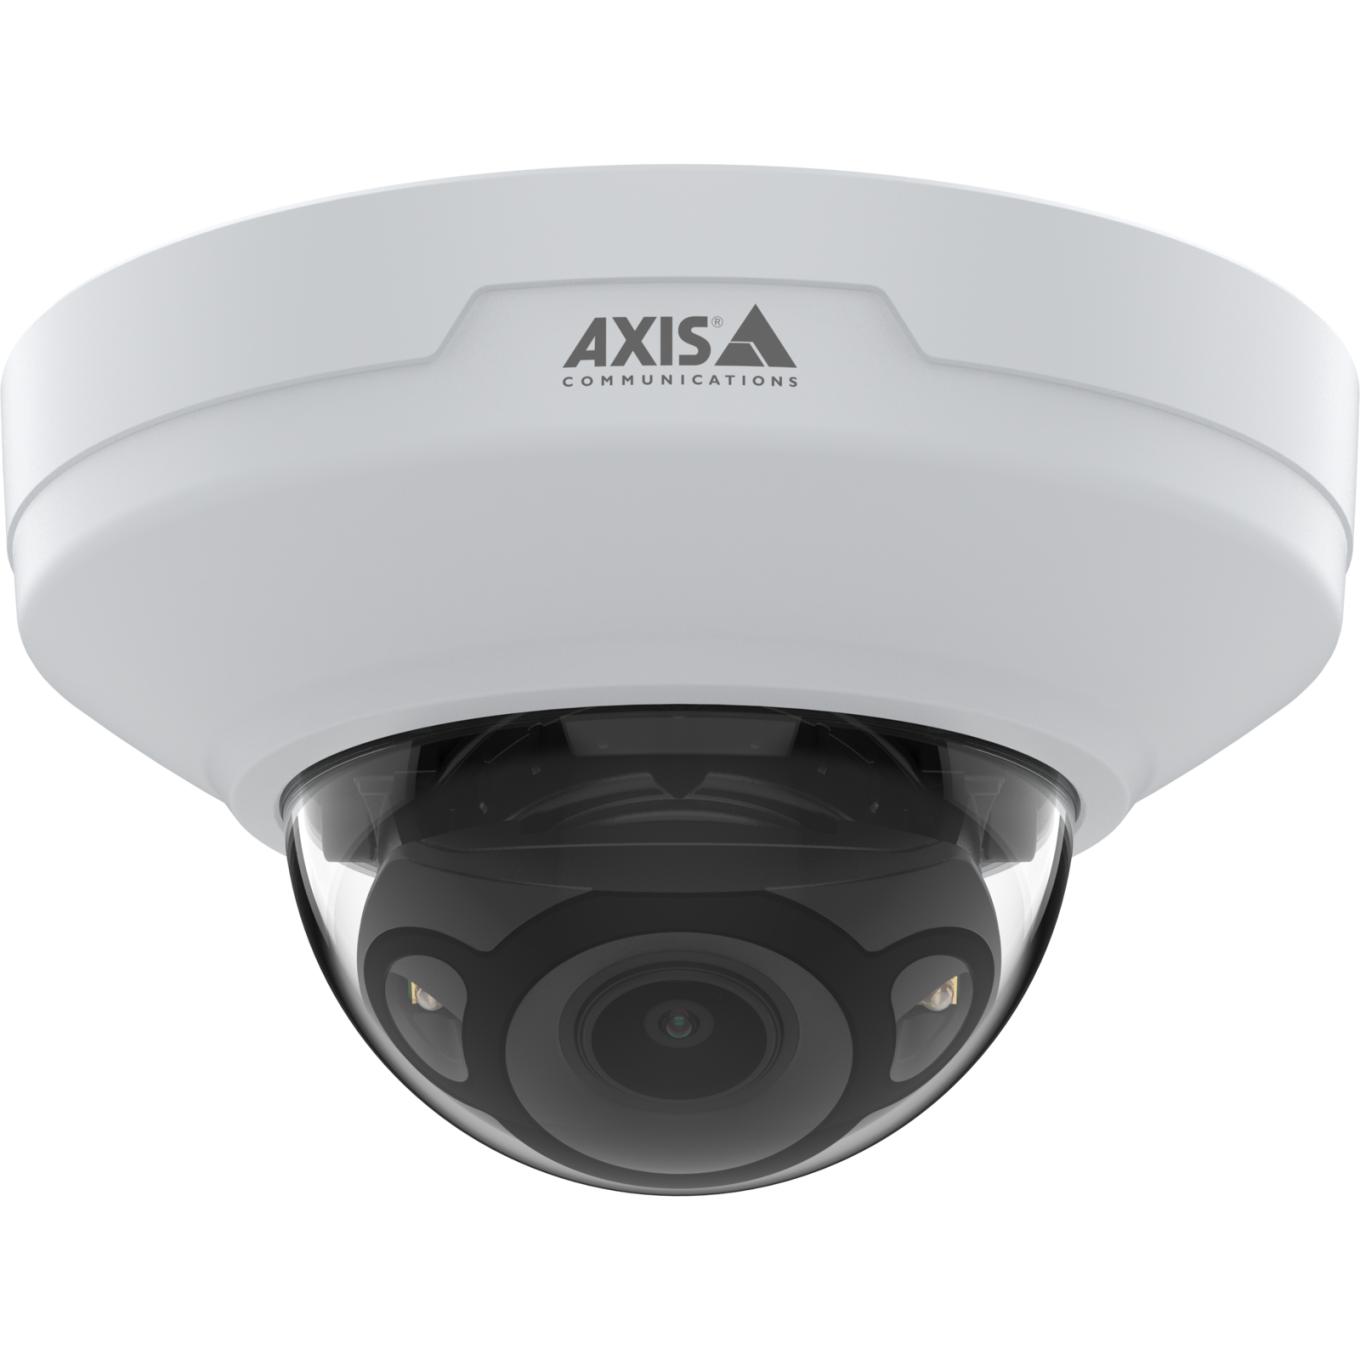 AXIS M4216-LV Dome Camera, plafond, vue de face